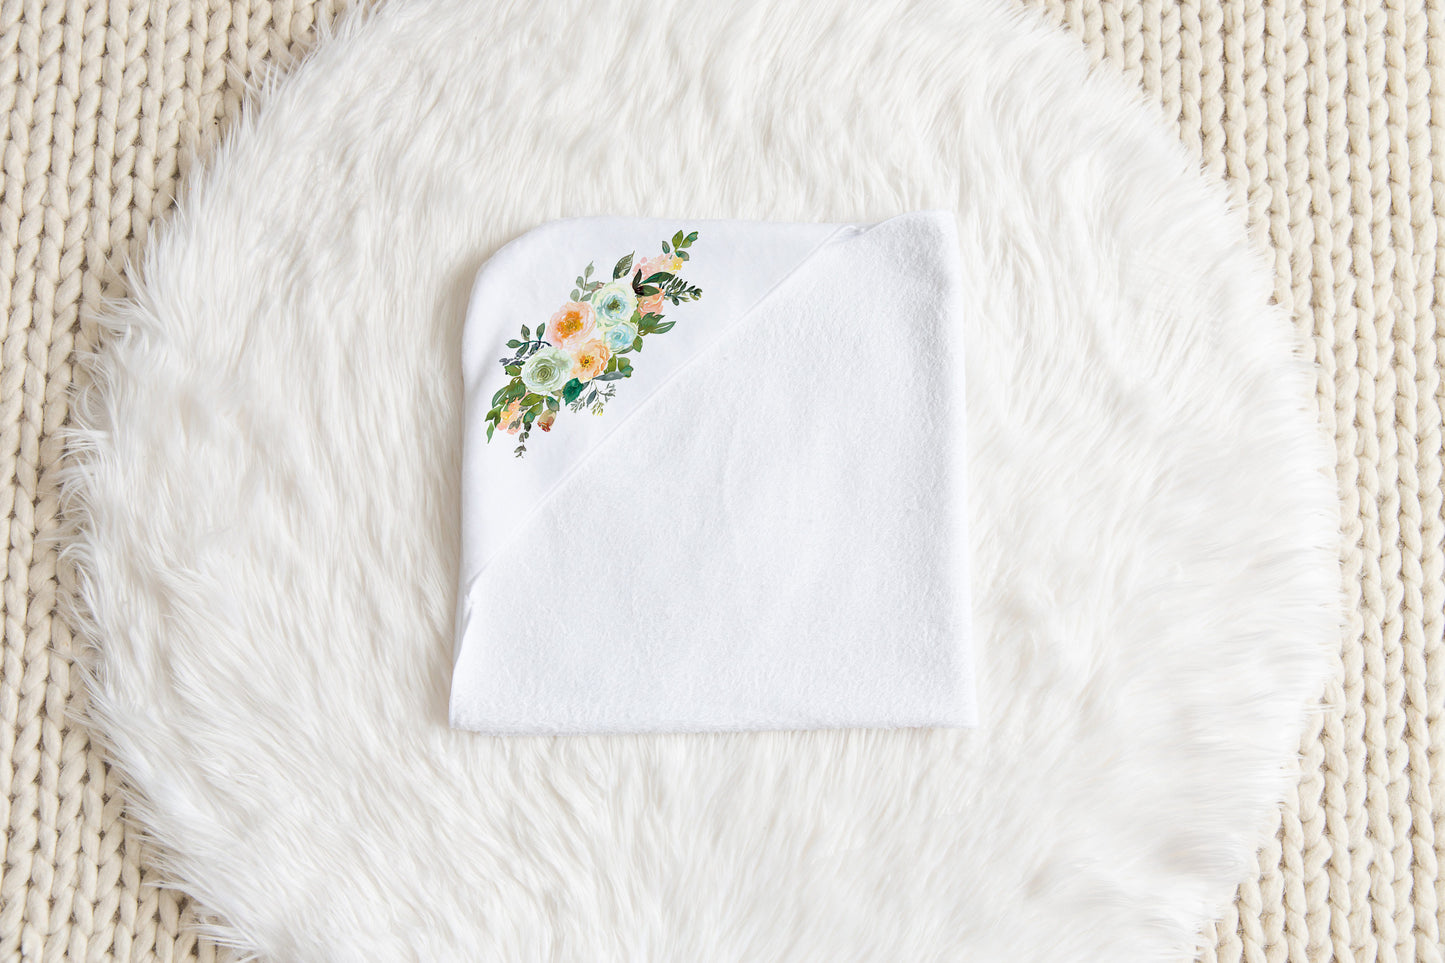 Floral Hooded Baby Towel, Baby Girl Bathroom Towel - Peach Mint Garden